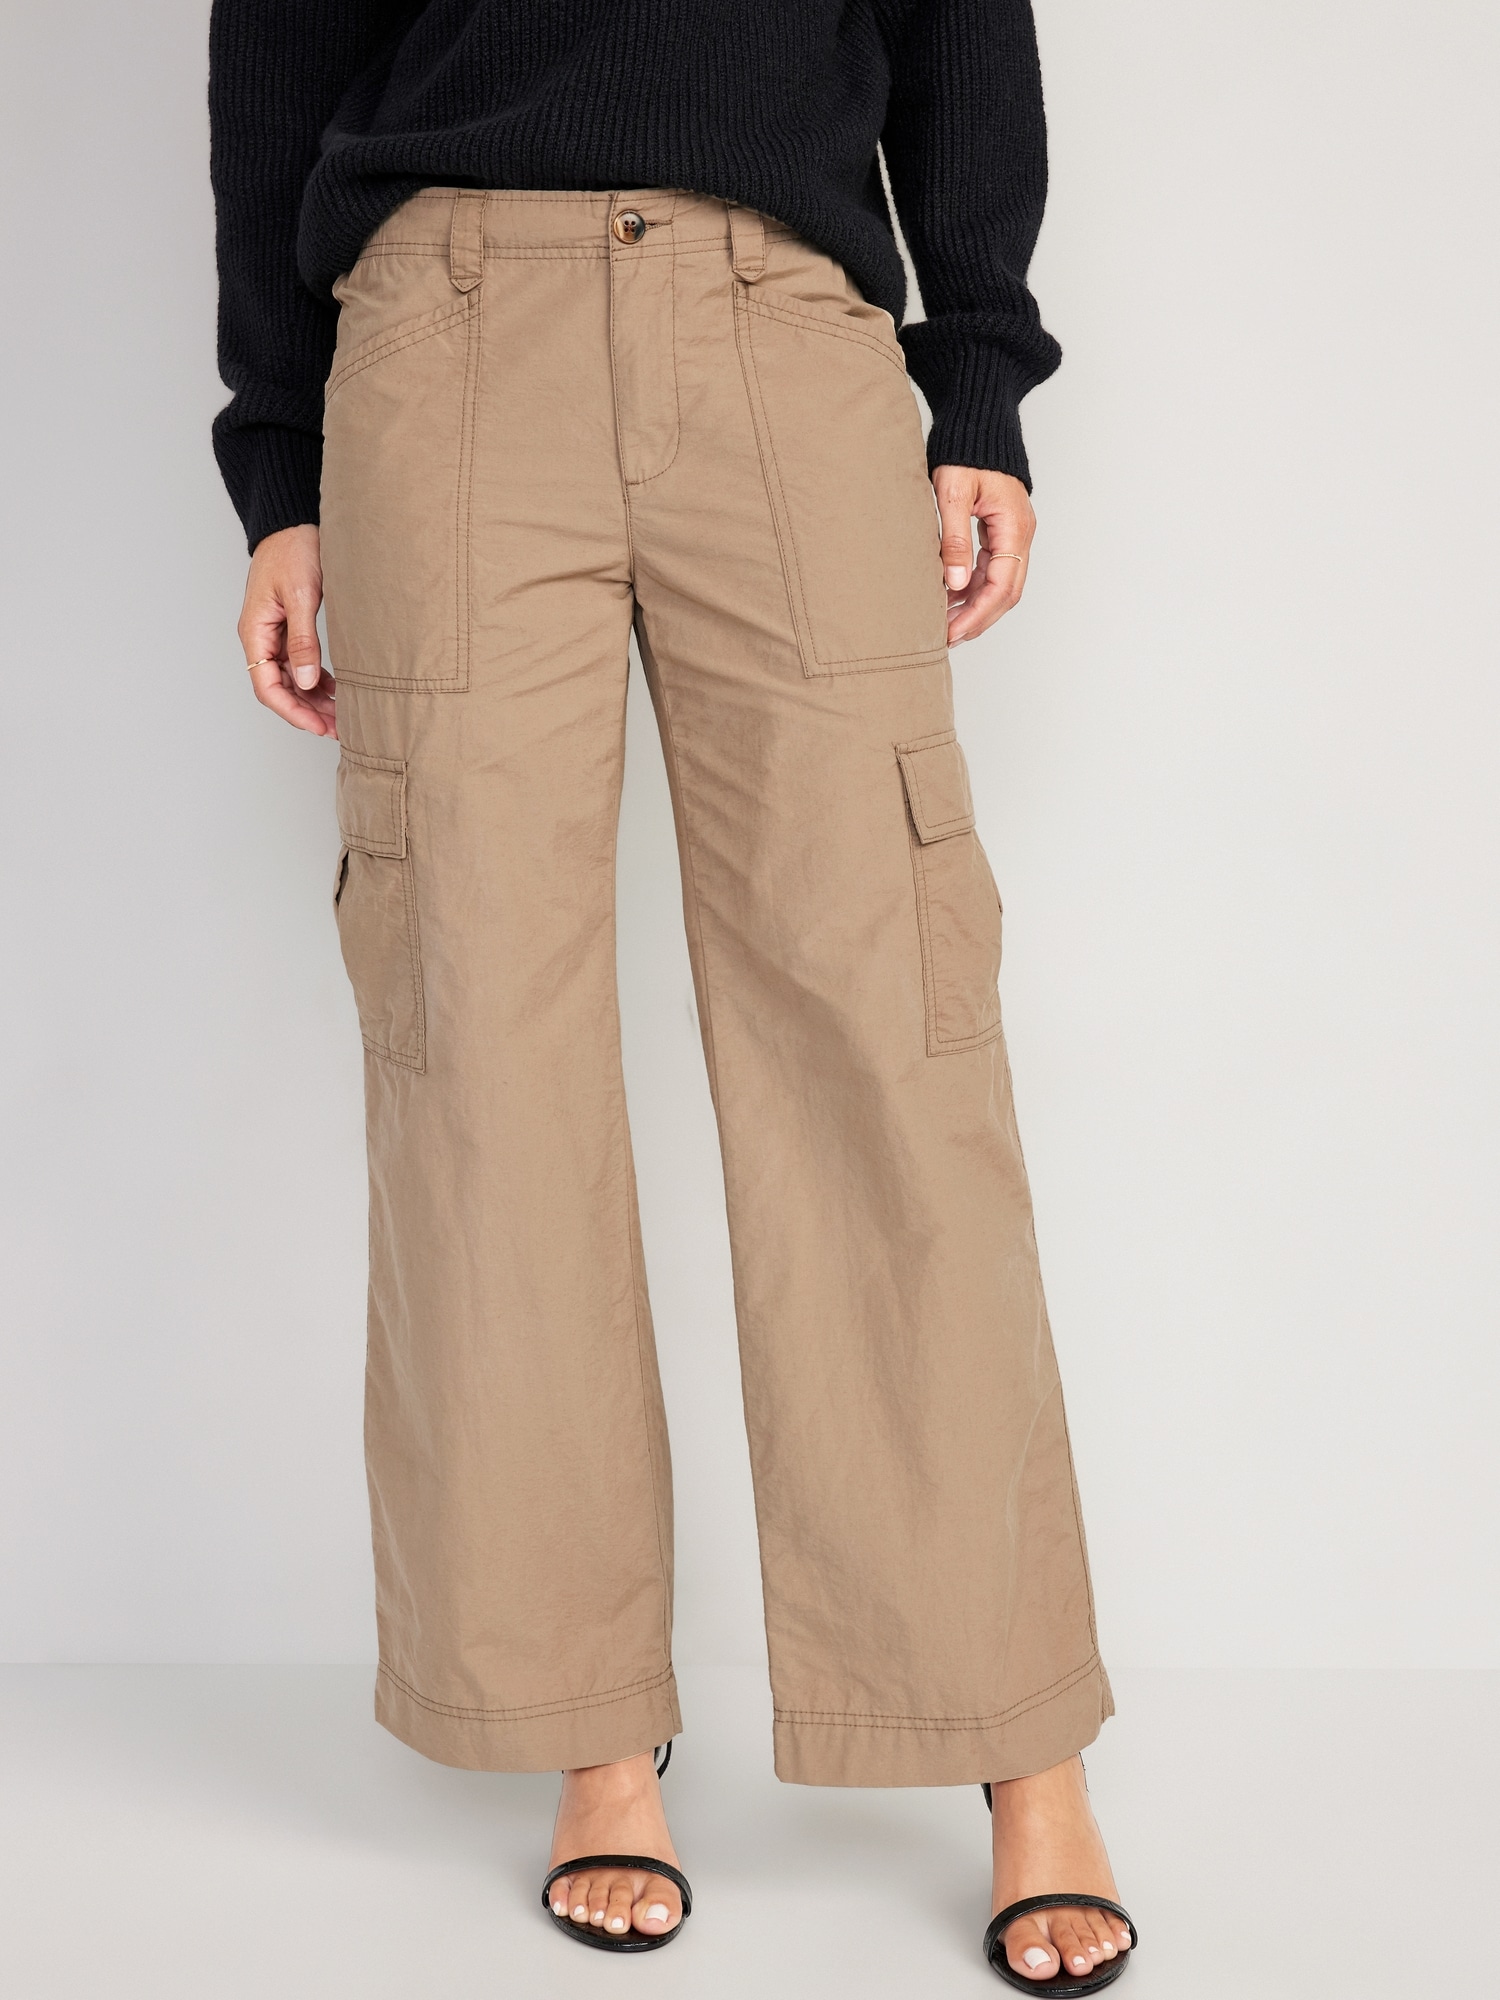 The 1964 Denim Company Girls Wide Leg Cargo Pants - Light Brown